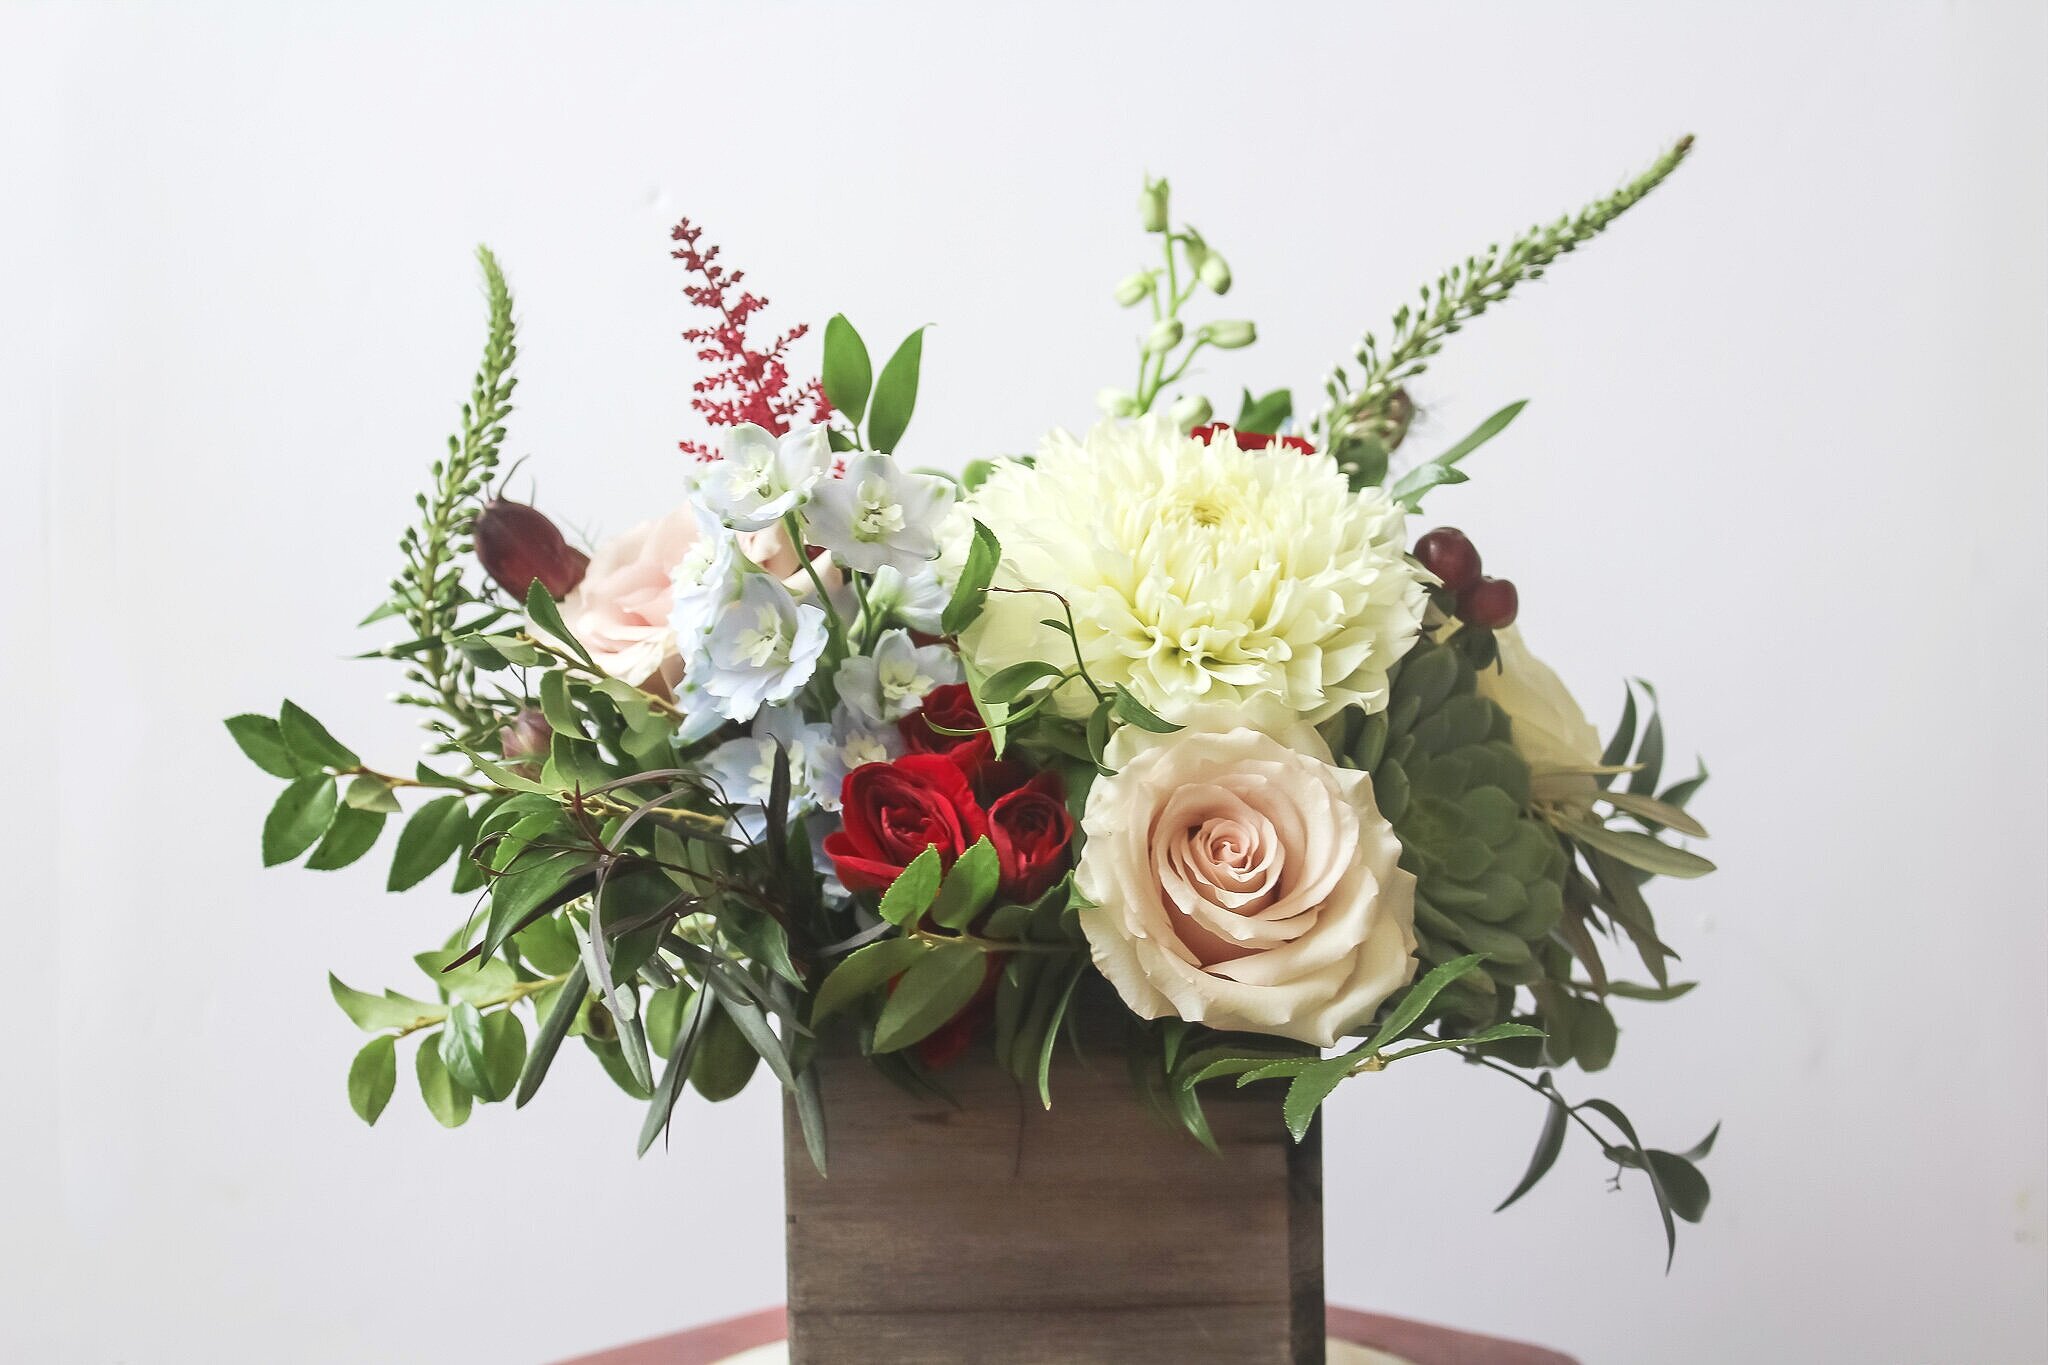 Image by Sarah's Floral Design 